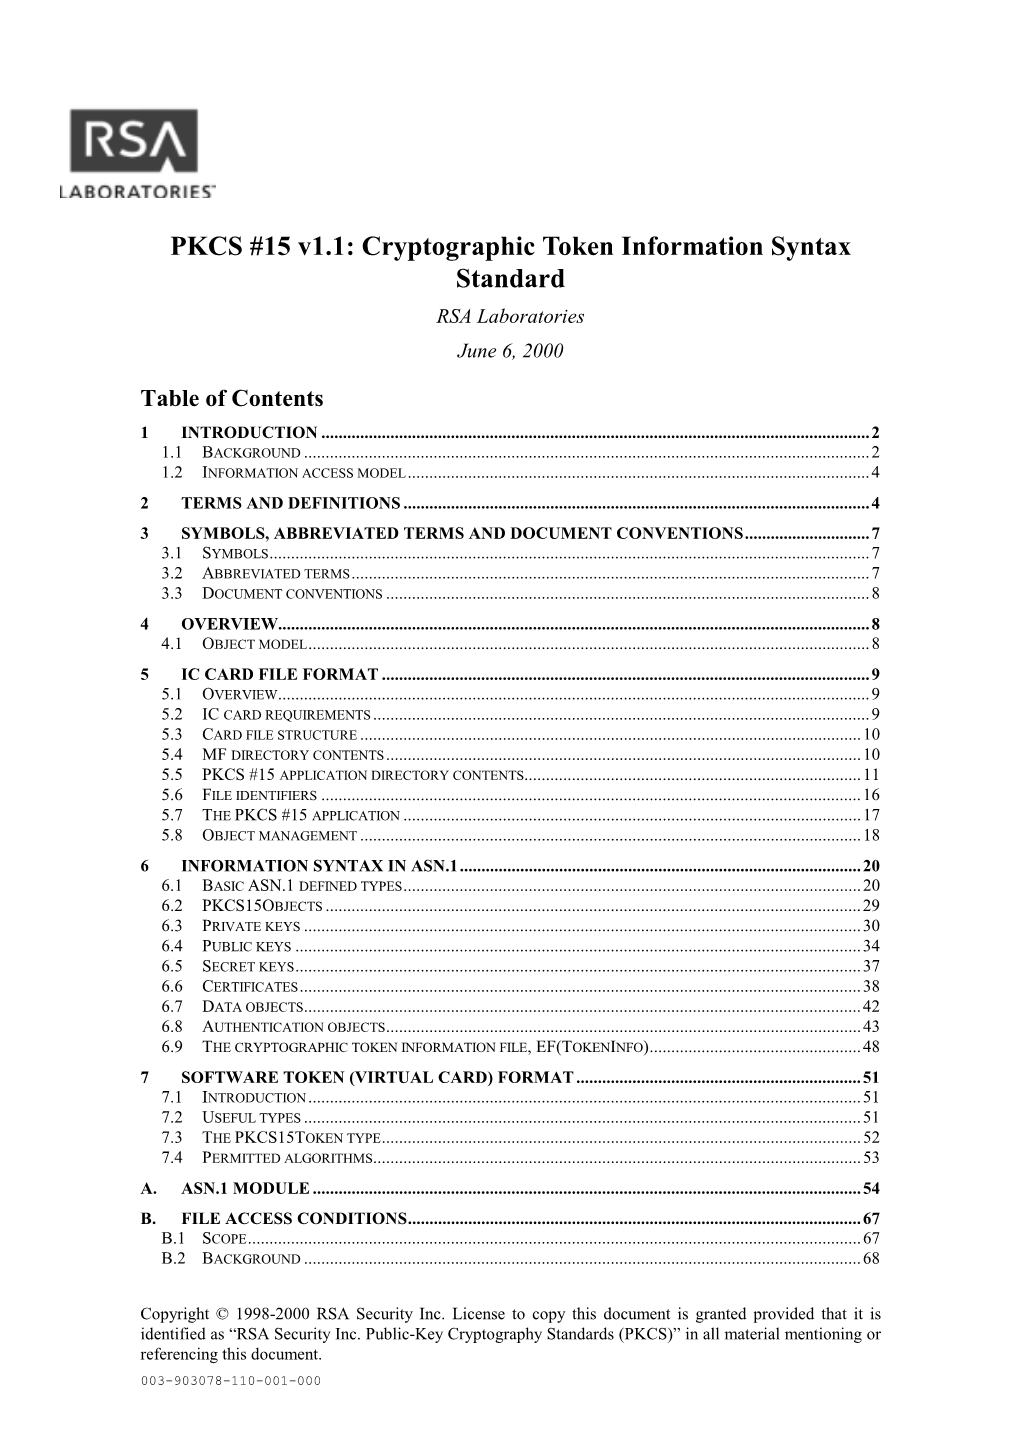 PKCS #15 V1.1: Cryptographic Token Information Syntax Standard RSA Laboratories June 6, 2000